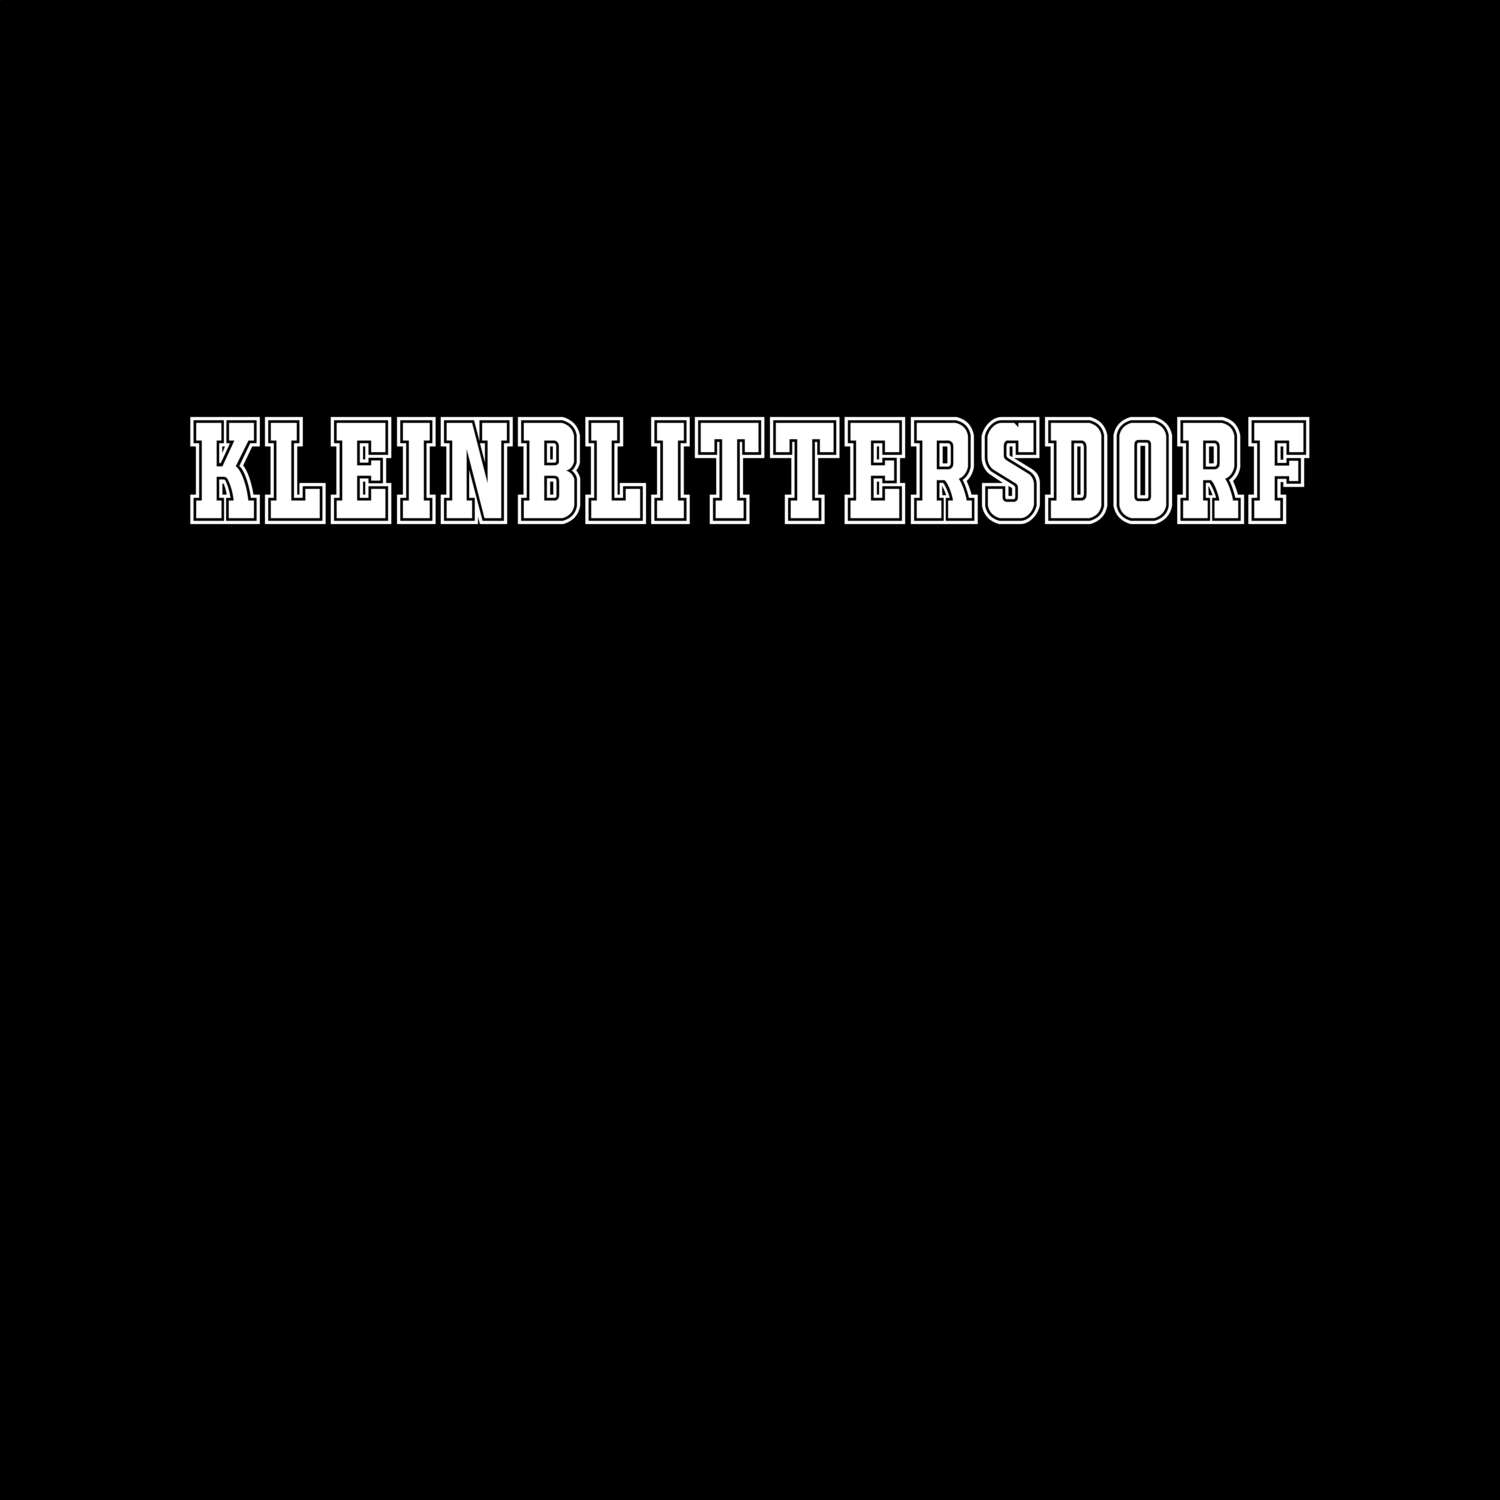 Kleinblittersdorf T-Shirt »Classic«